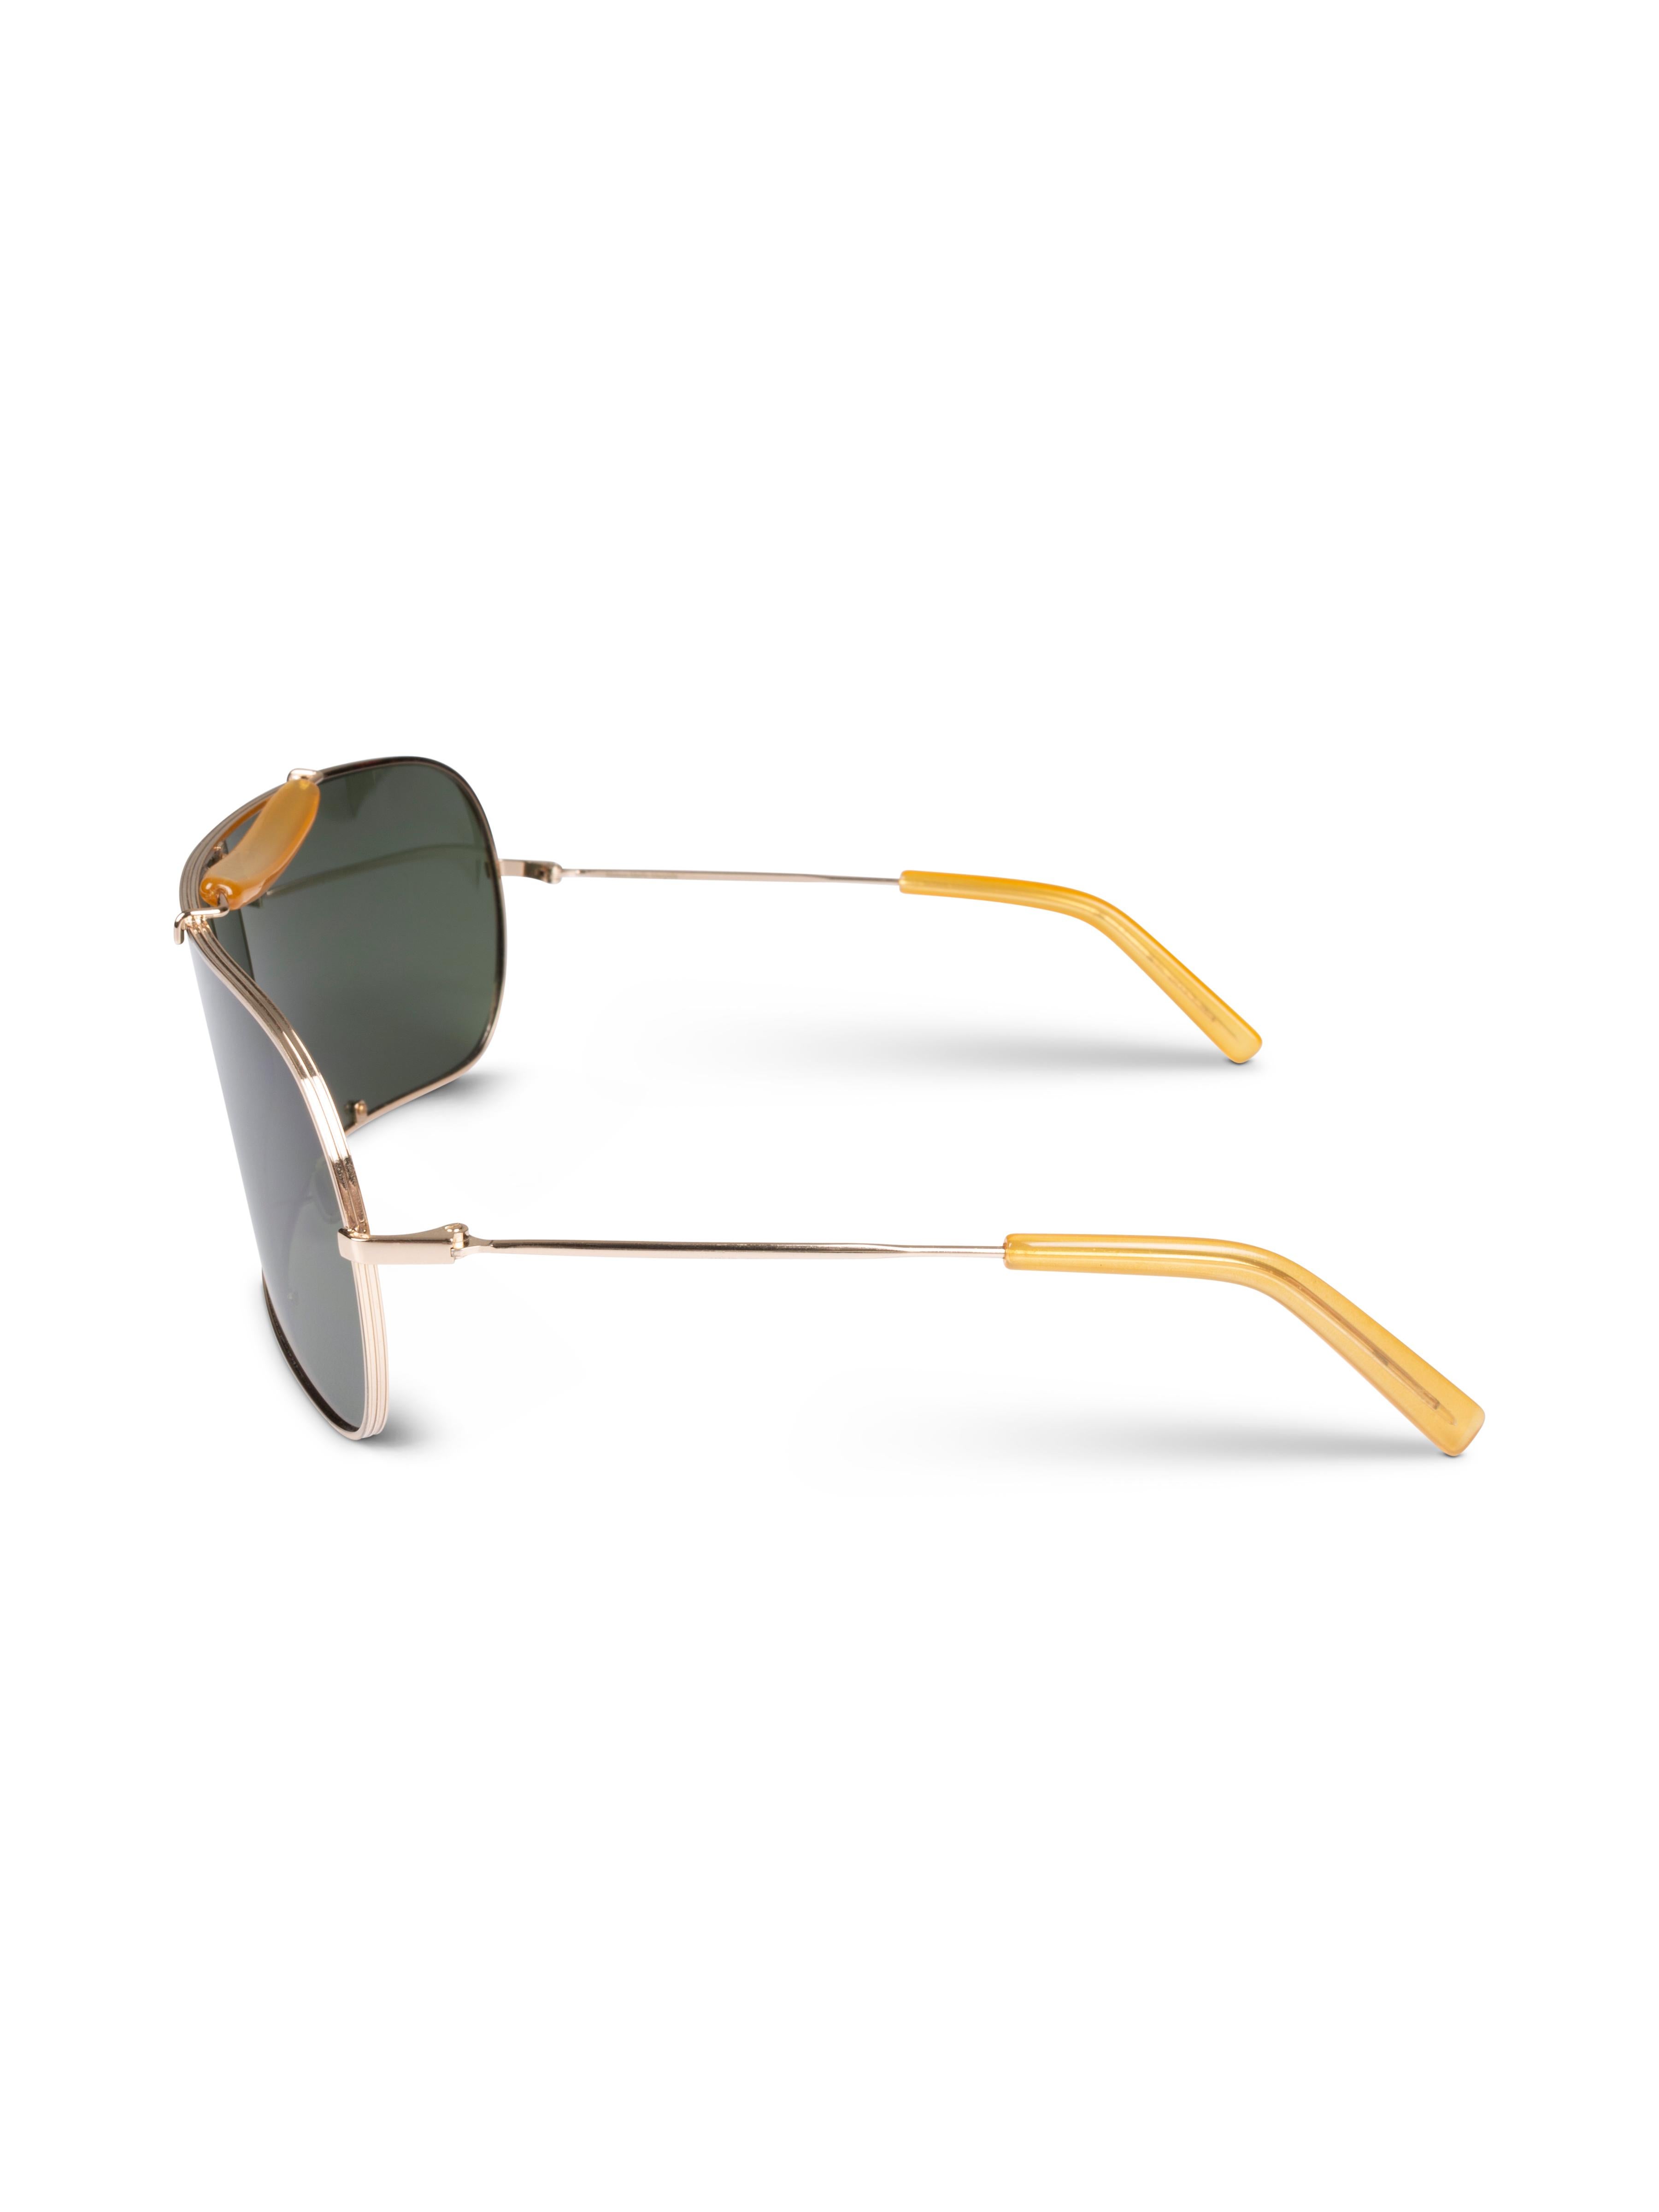 Margiela Sunglasses - For Sale on 1stDibs | maison margiela sunglasses,  margiela shades, maison martin margiela sunglasses